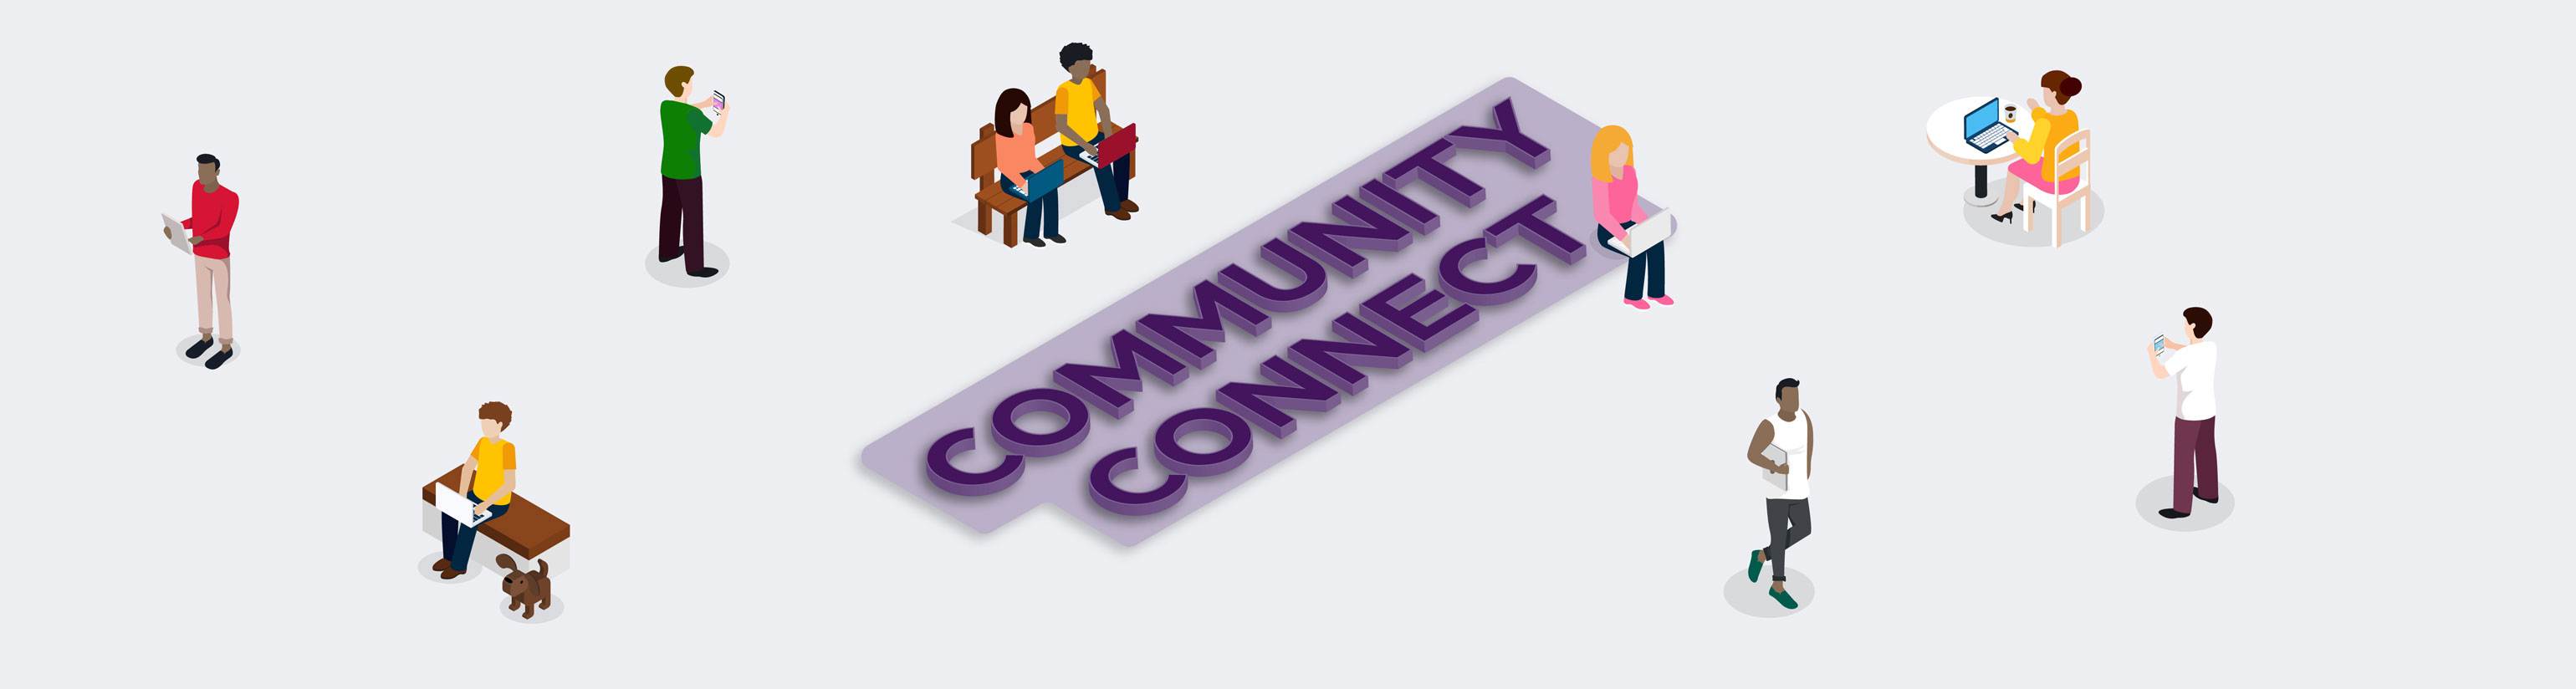 community_connect